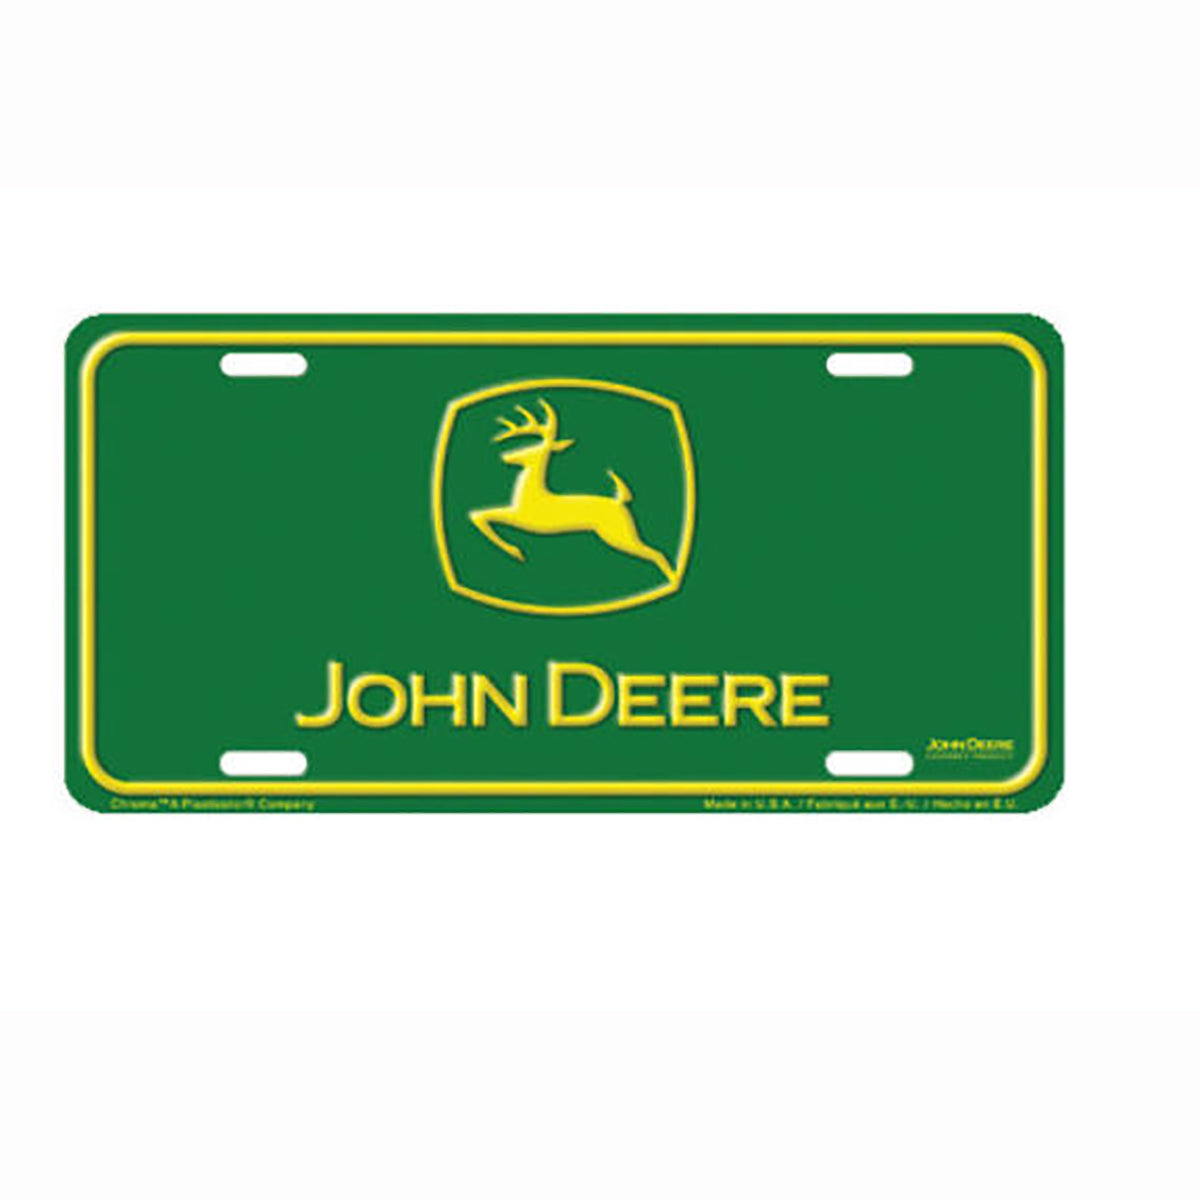 John Deere Stamped Green Aluminum License Plate